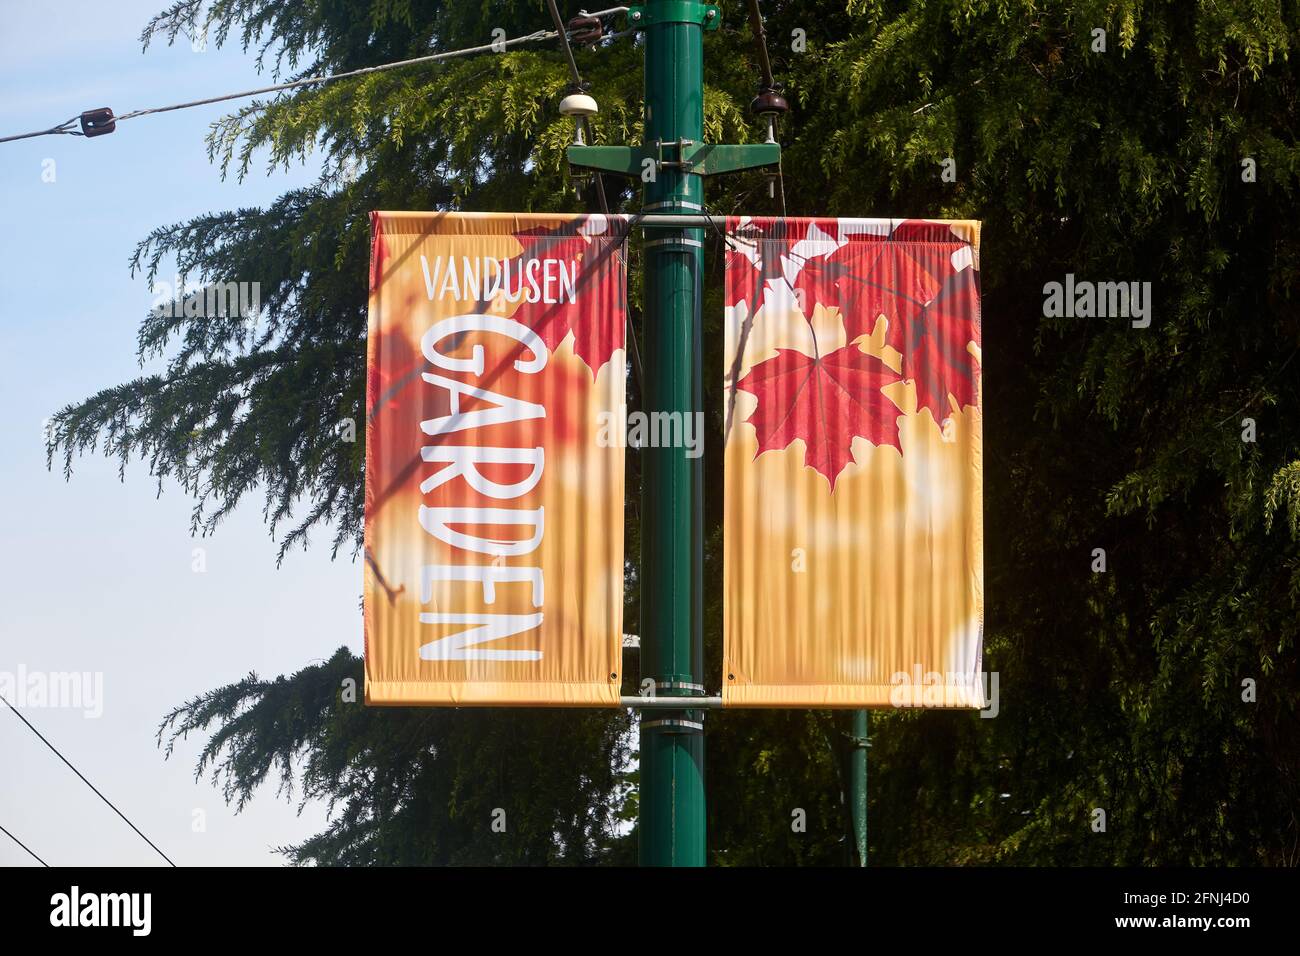 VanDusen Botanical Garden banners en un poste de lámpara en Vancouver, BC, Canadá Foto de stock